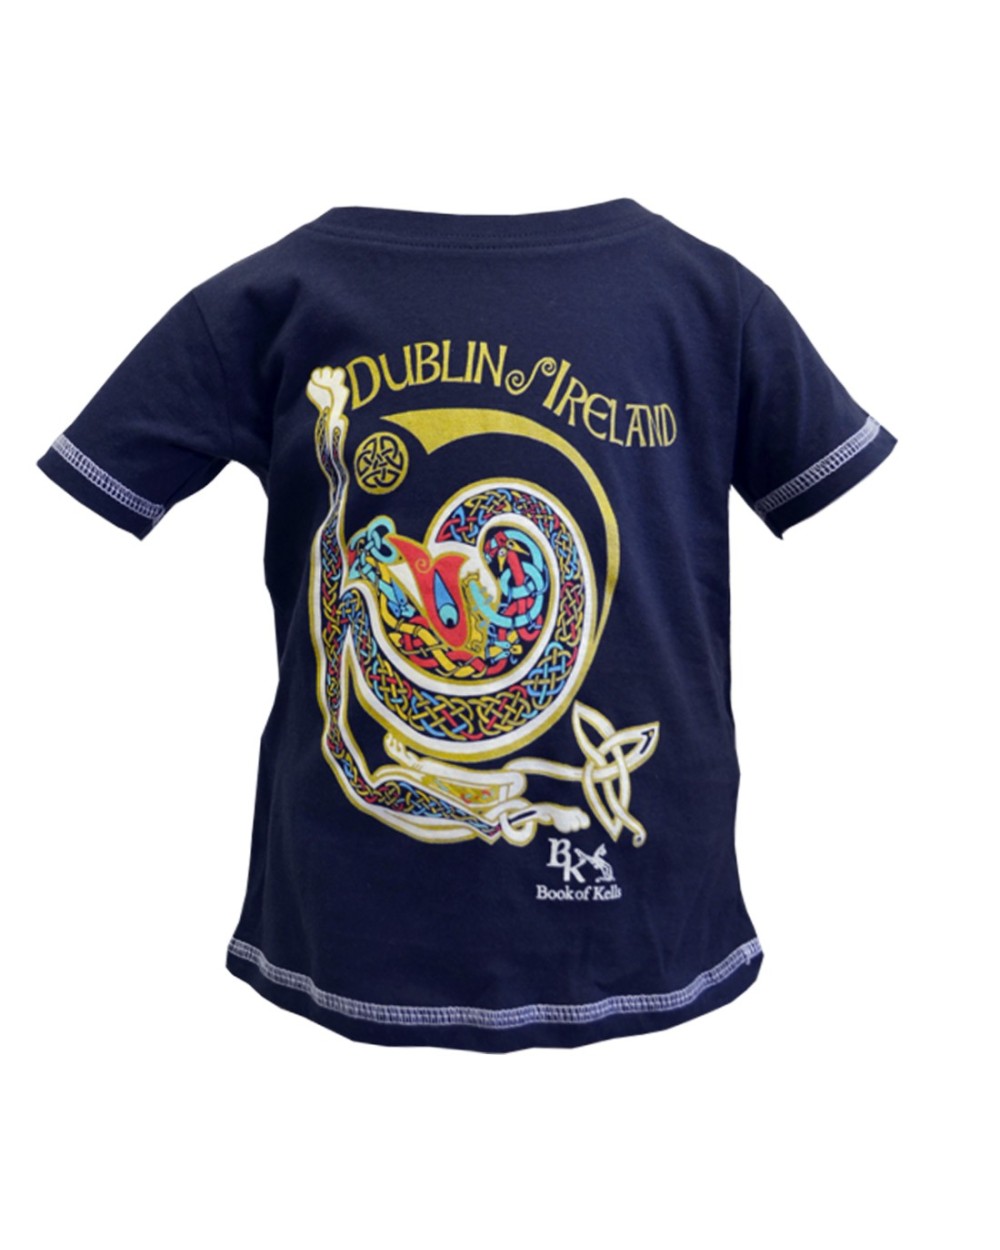 Book of Kells Navy Celtic Swirl Kids T-shirt